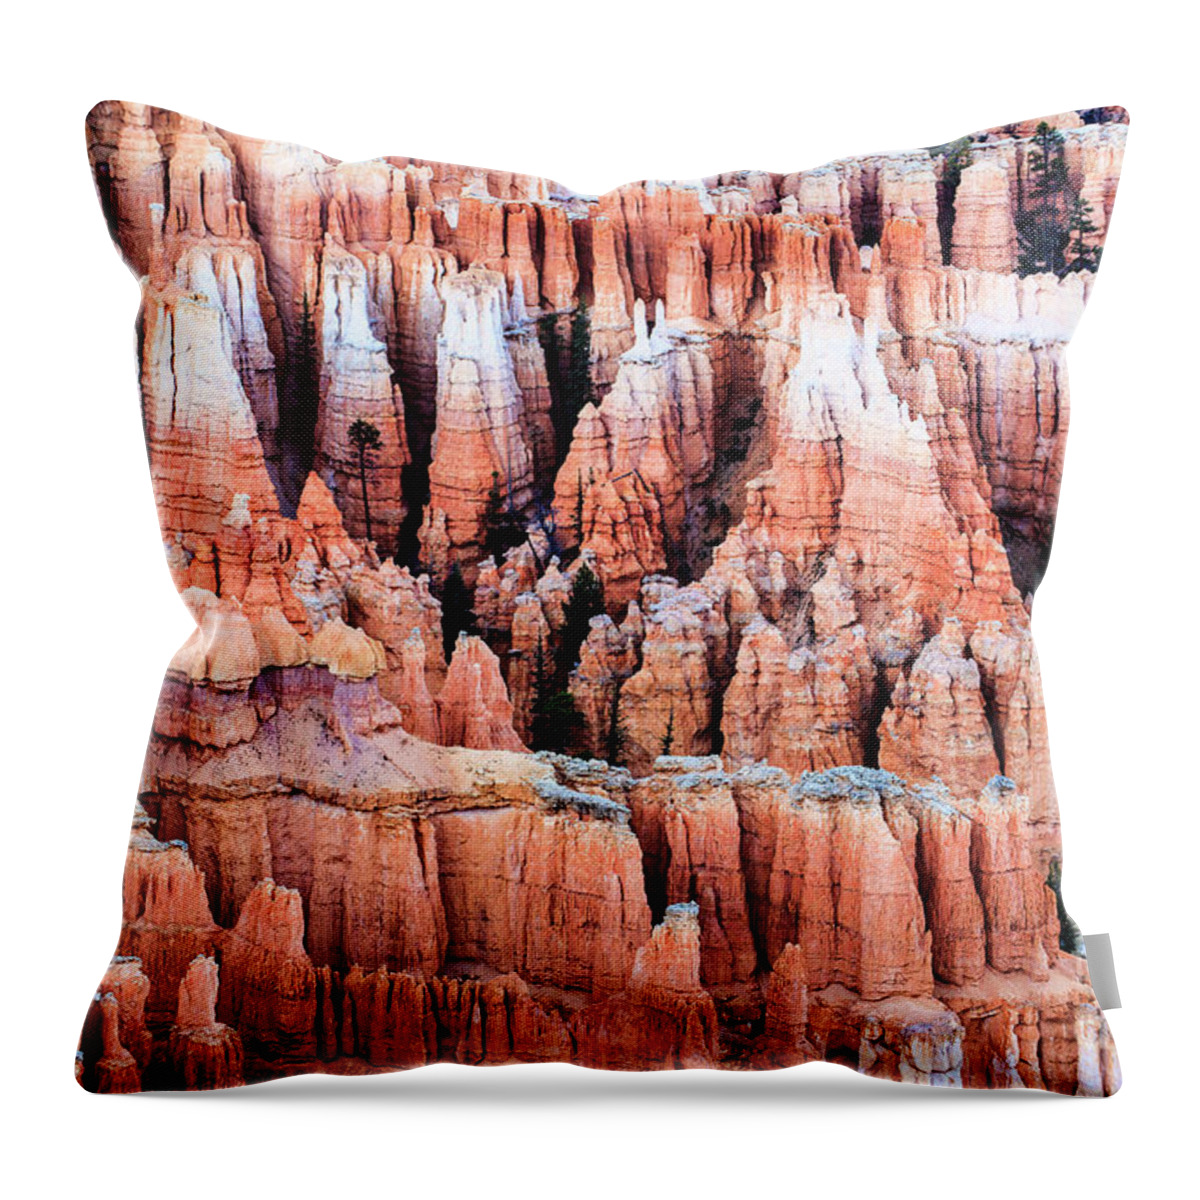 Bryce Canyon National Park Throw Pillow featuring the photograph Hoodoos at Bryce Canyon Utah by Ben Graham